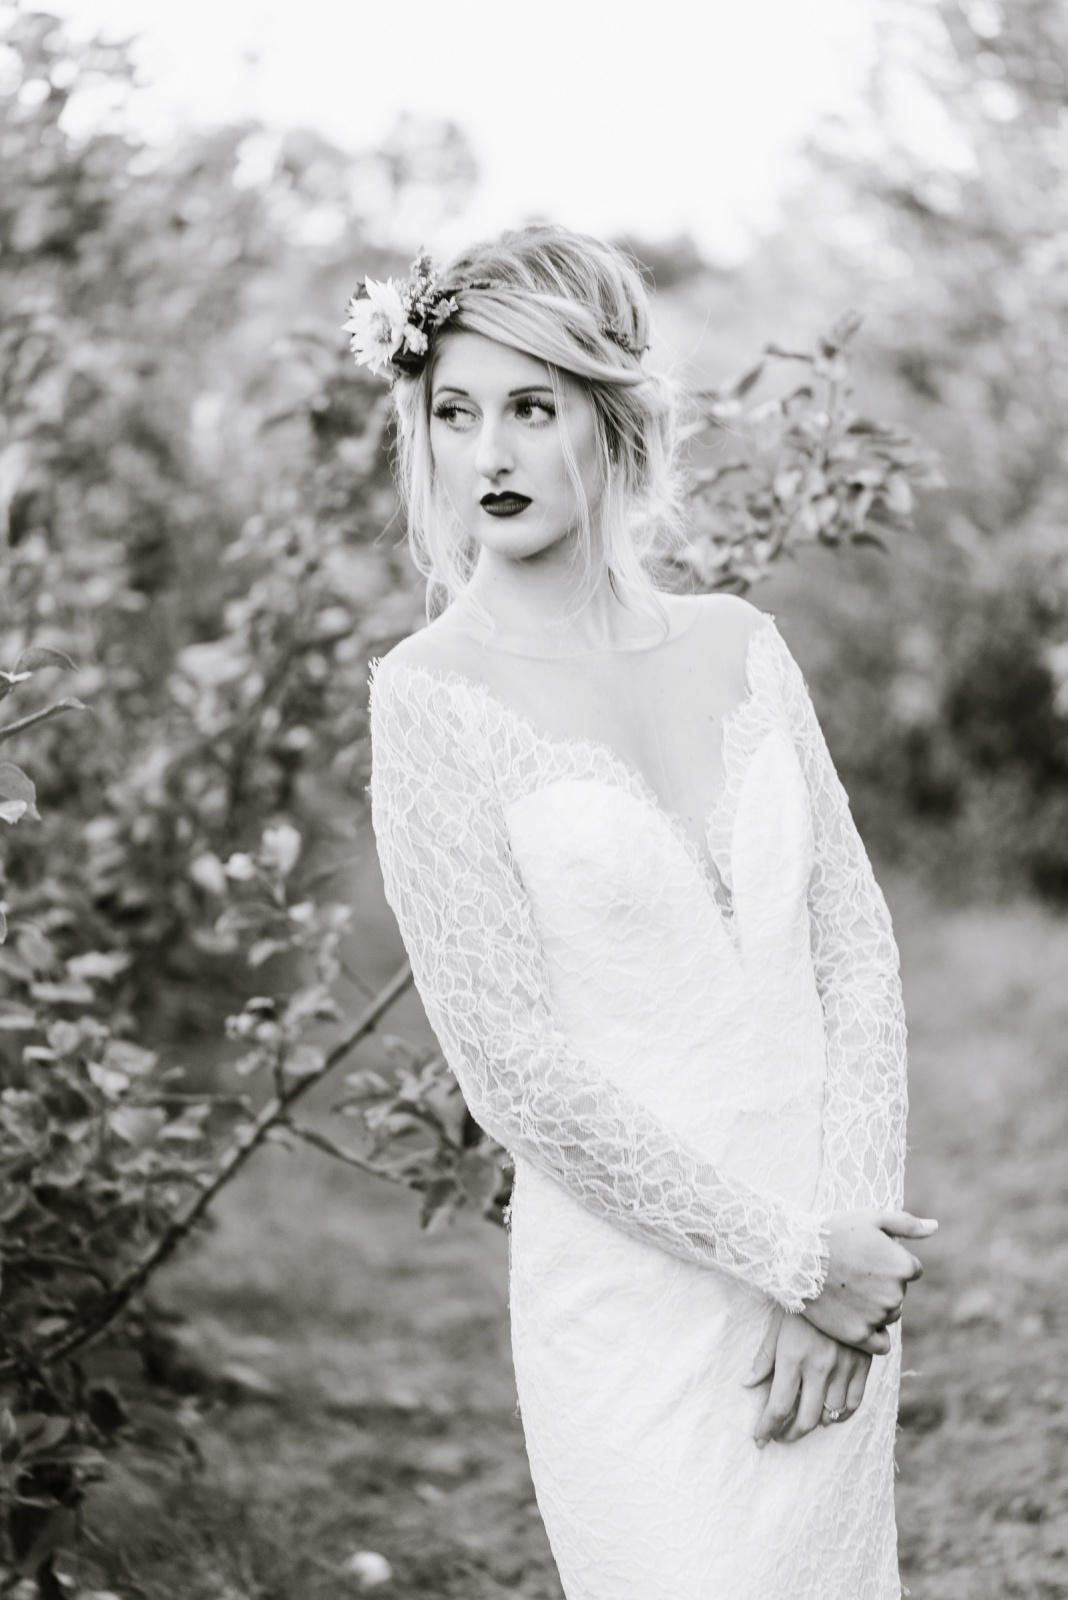 Autumn Orchard Romance Wedding Inspiration Shoot - Annmarie Swift ...